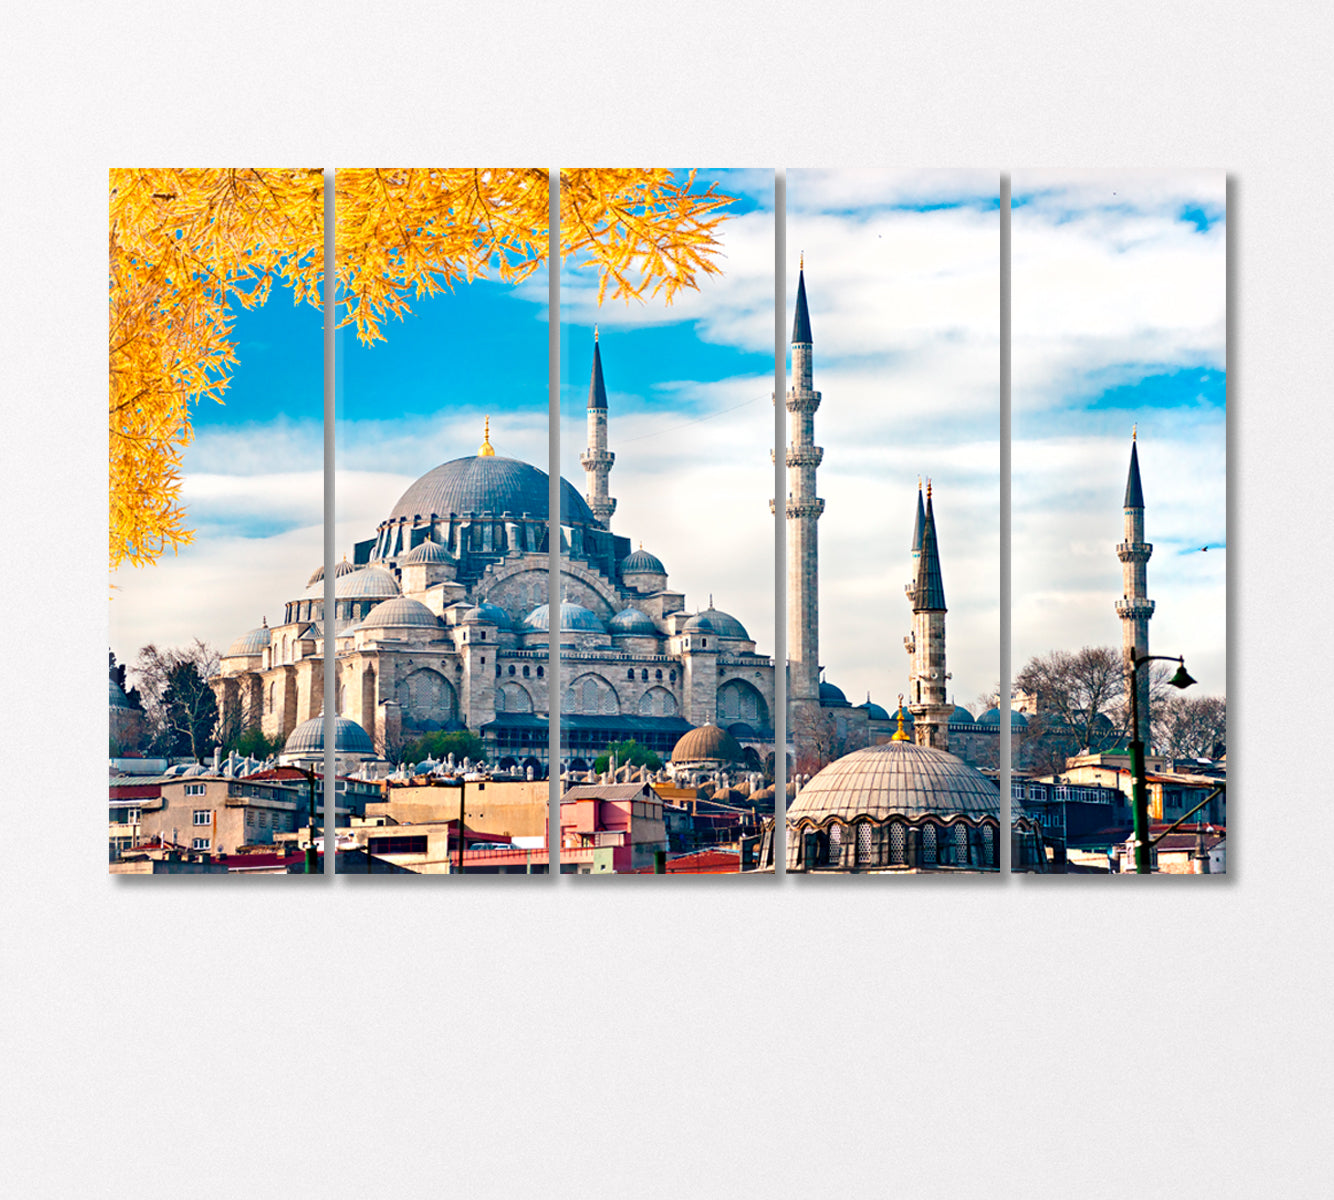 Suleymaniye Mosque Istanbul Turkey Canvas Print-Canvas Print-CetArt-5 Panels-36x24 inches-CetArt